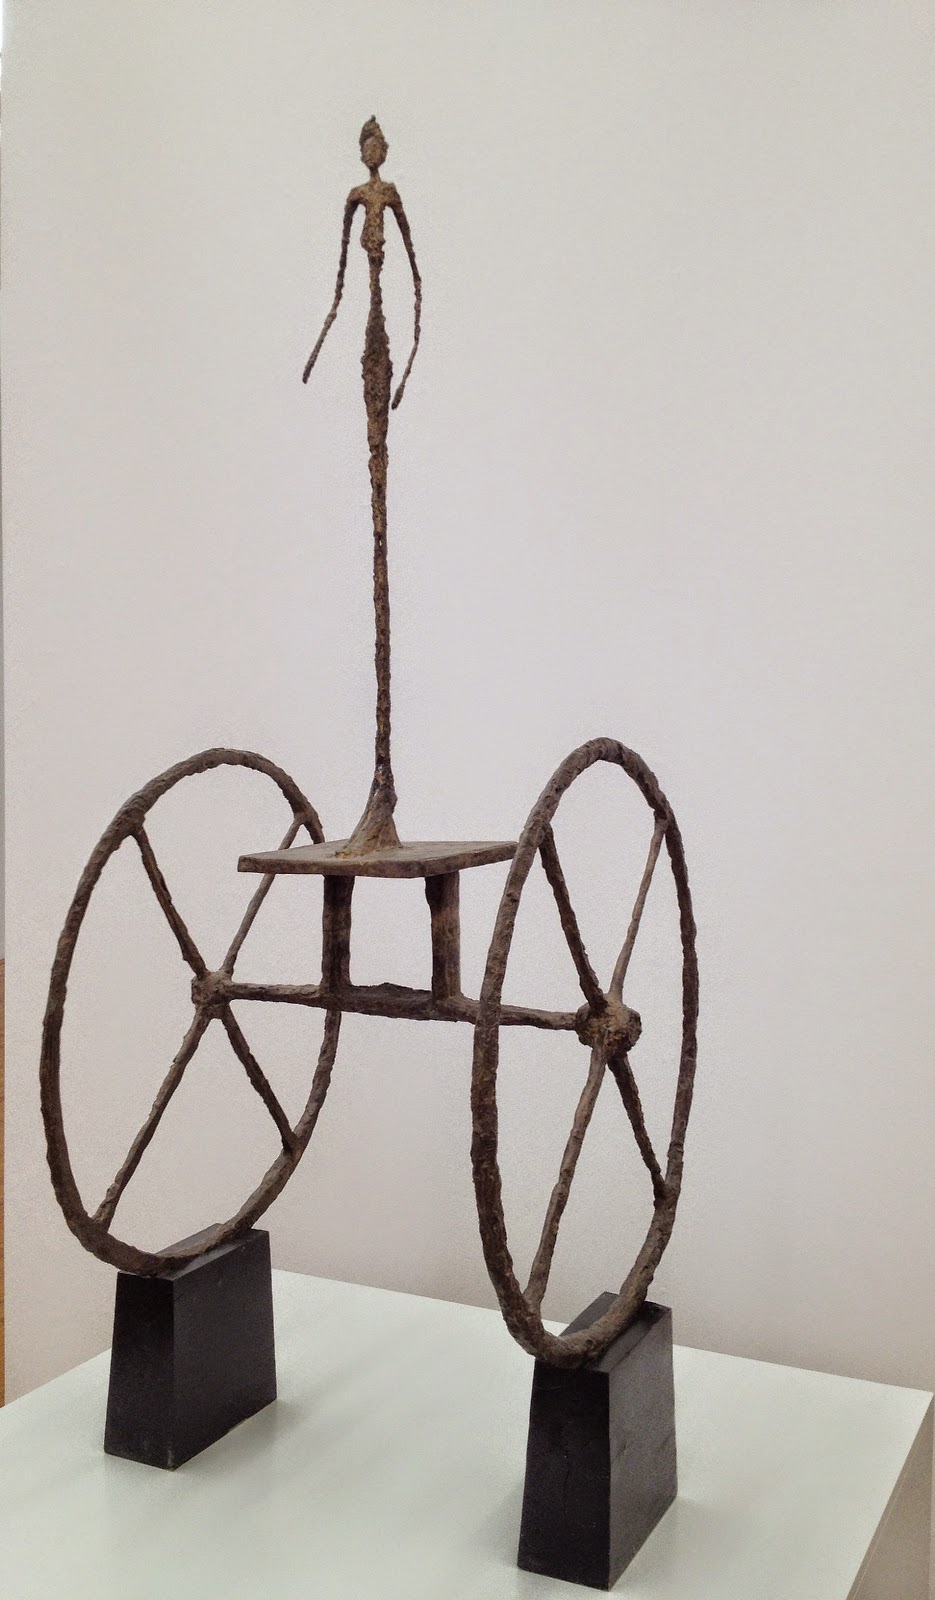 Alberto+Giacometti-1901-1966 (100).jpg